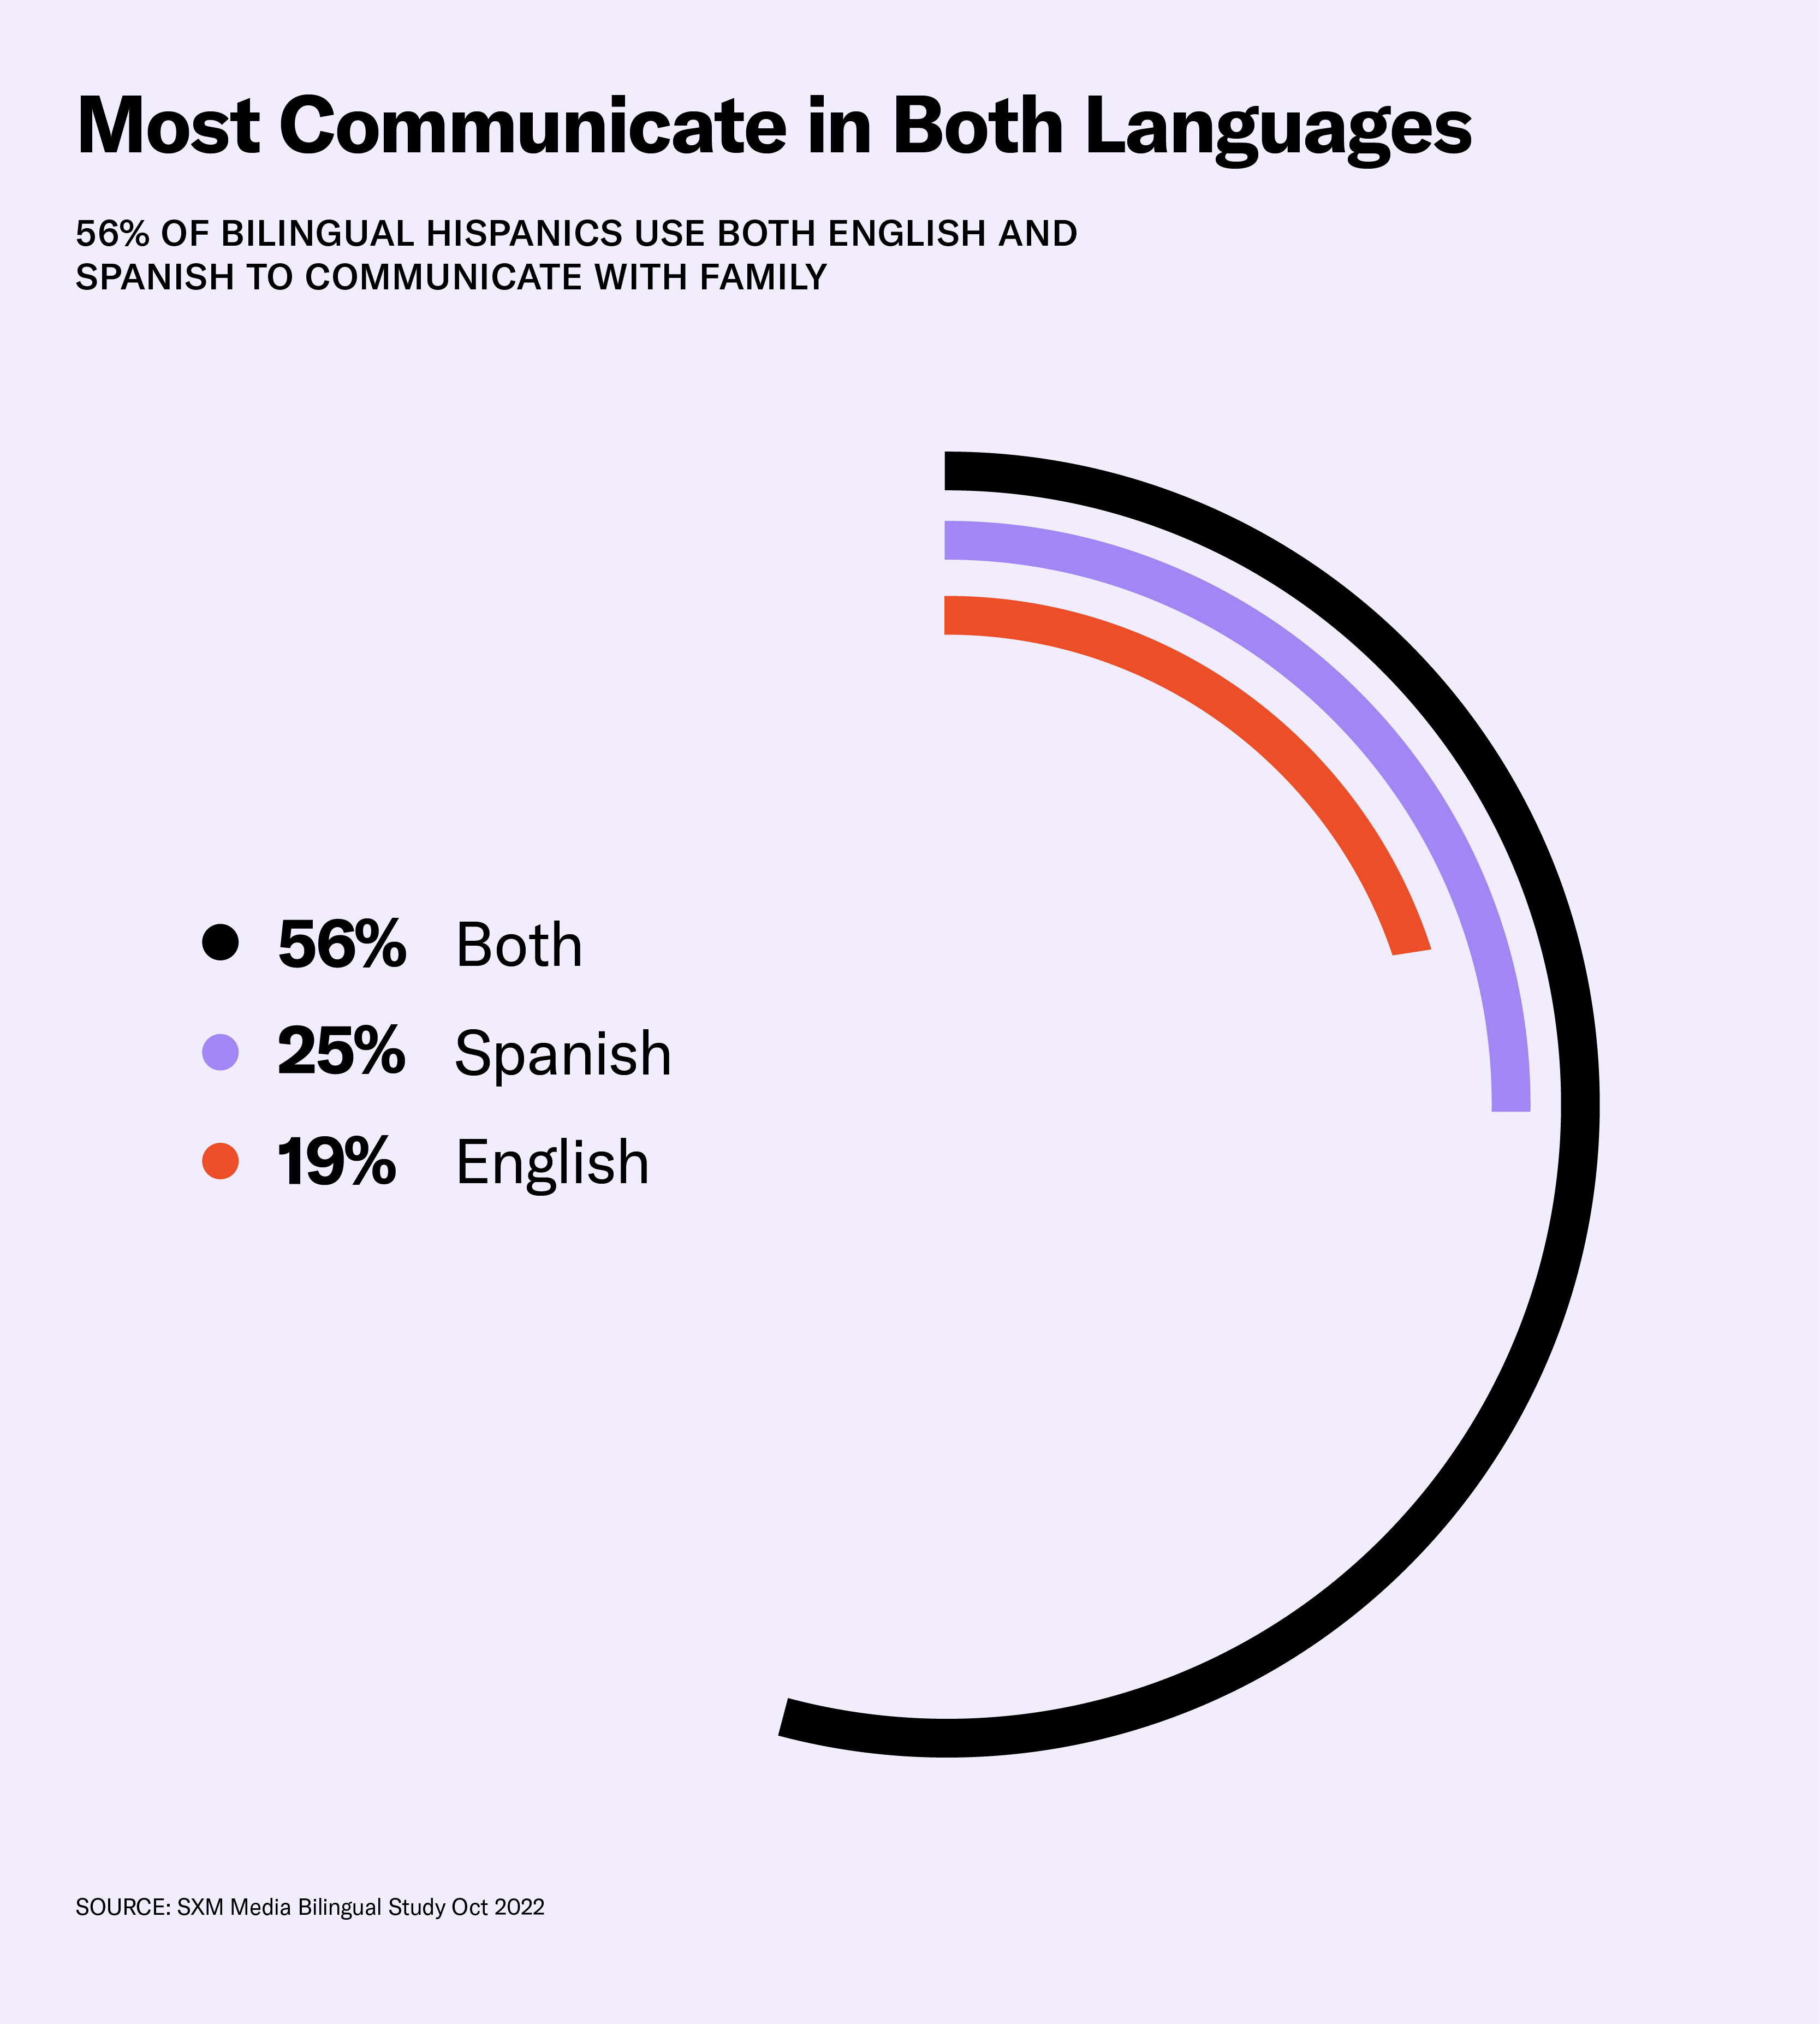 Most bilingual Hispanics communicate in both languages